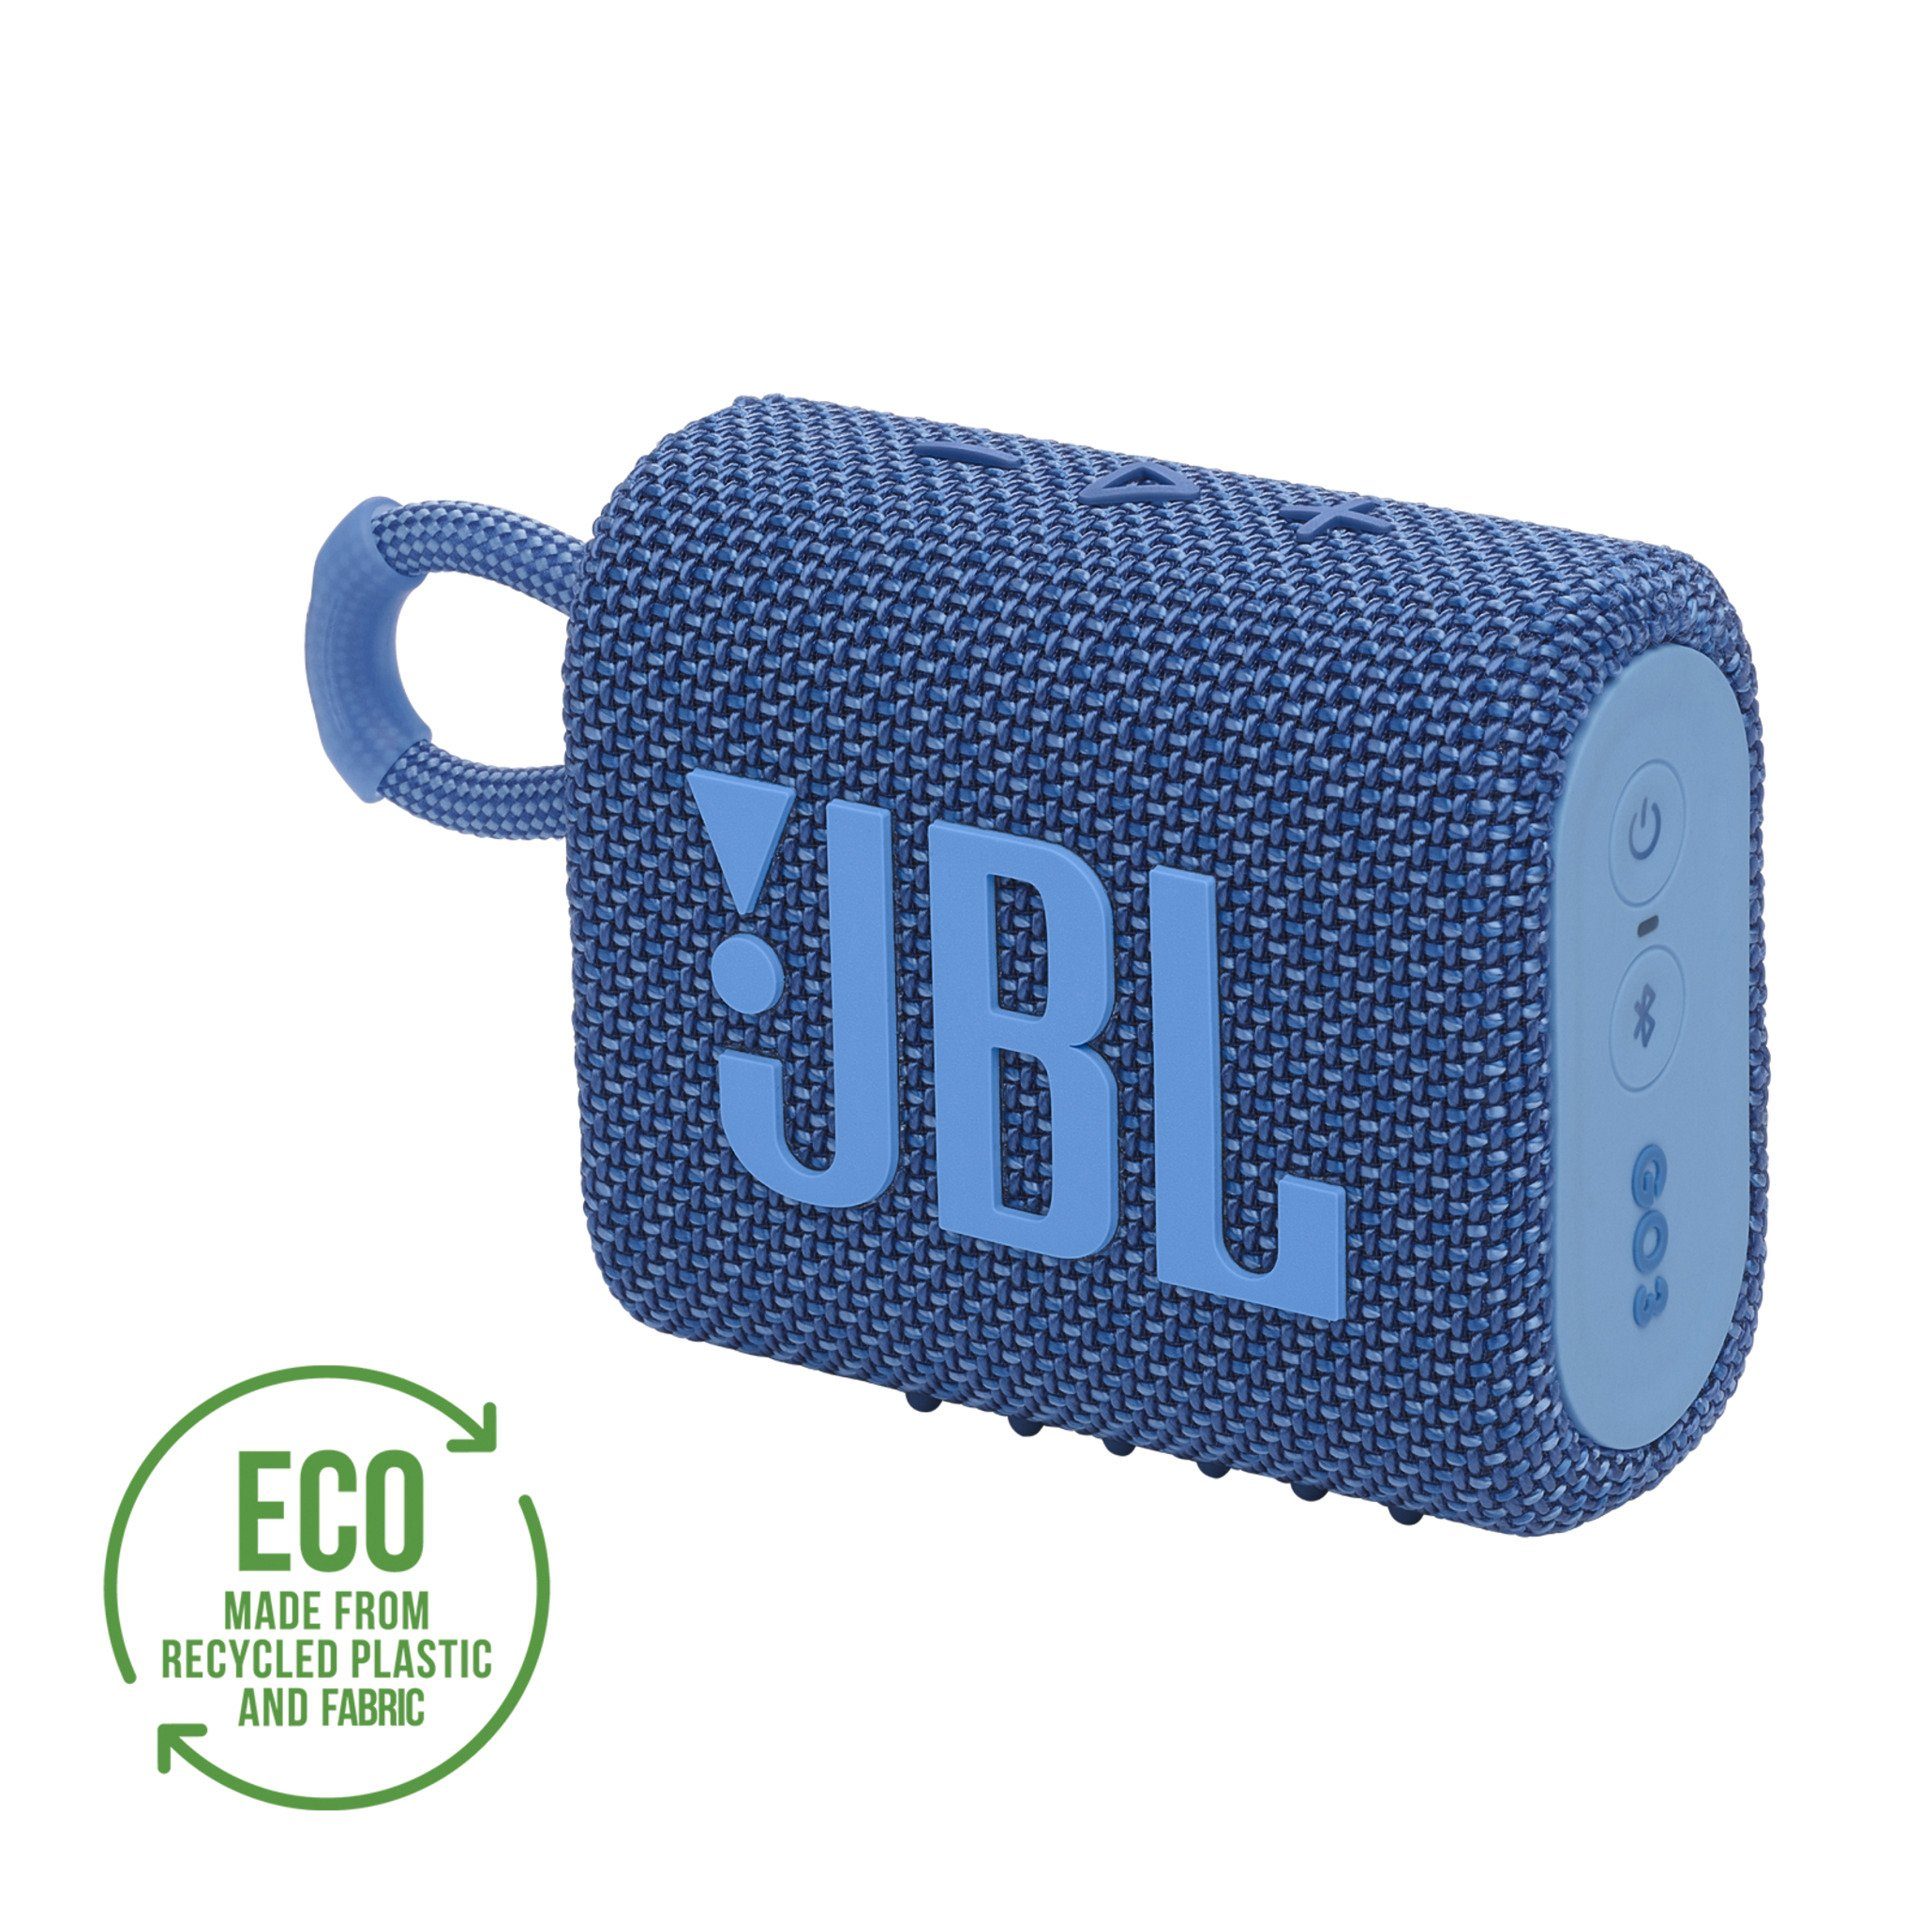 JBL GO 3 ECO Bluetooth-Lautsprecher (A2DP Bluetooth, 4,2 W)